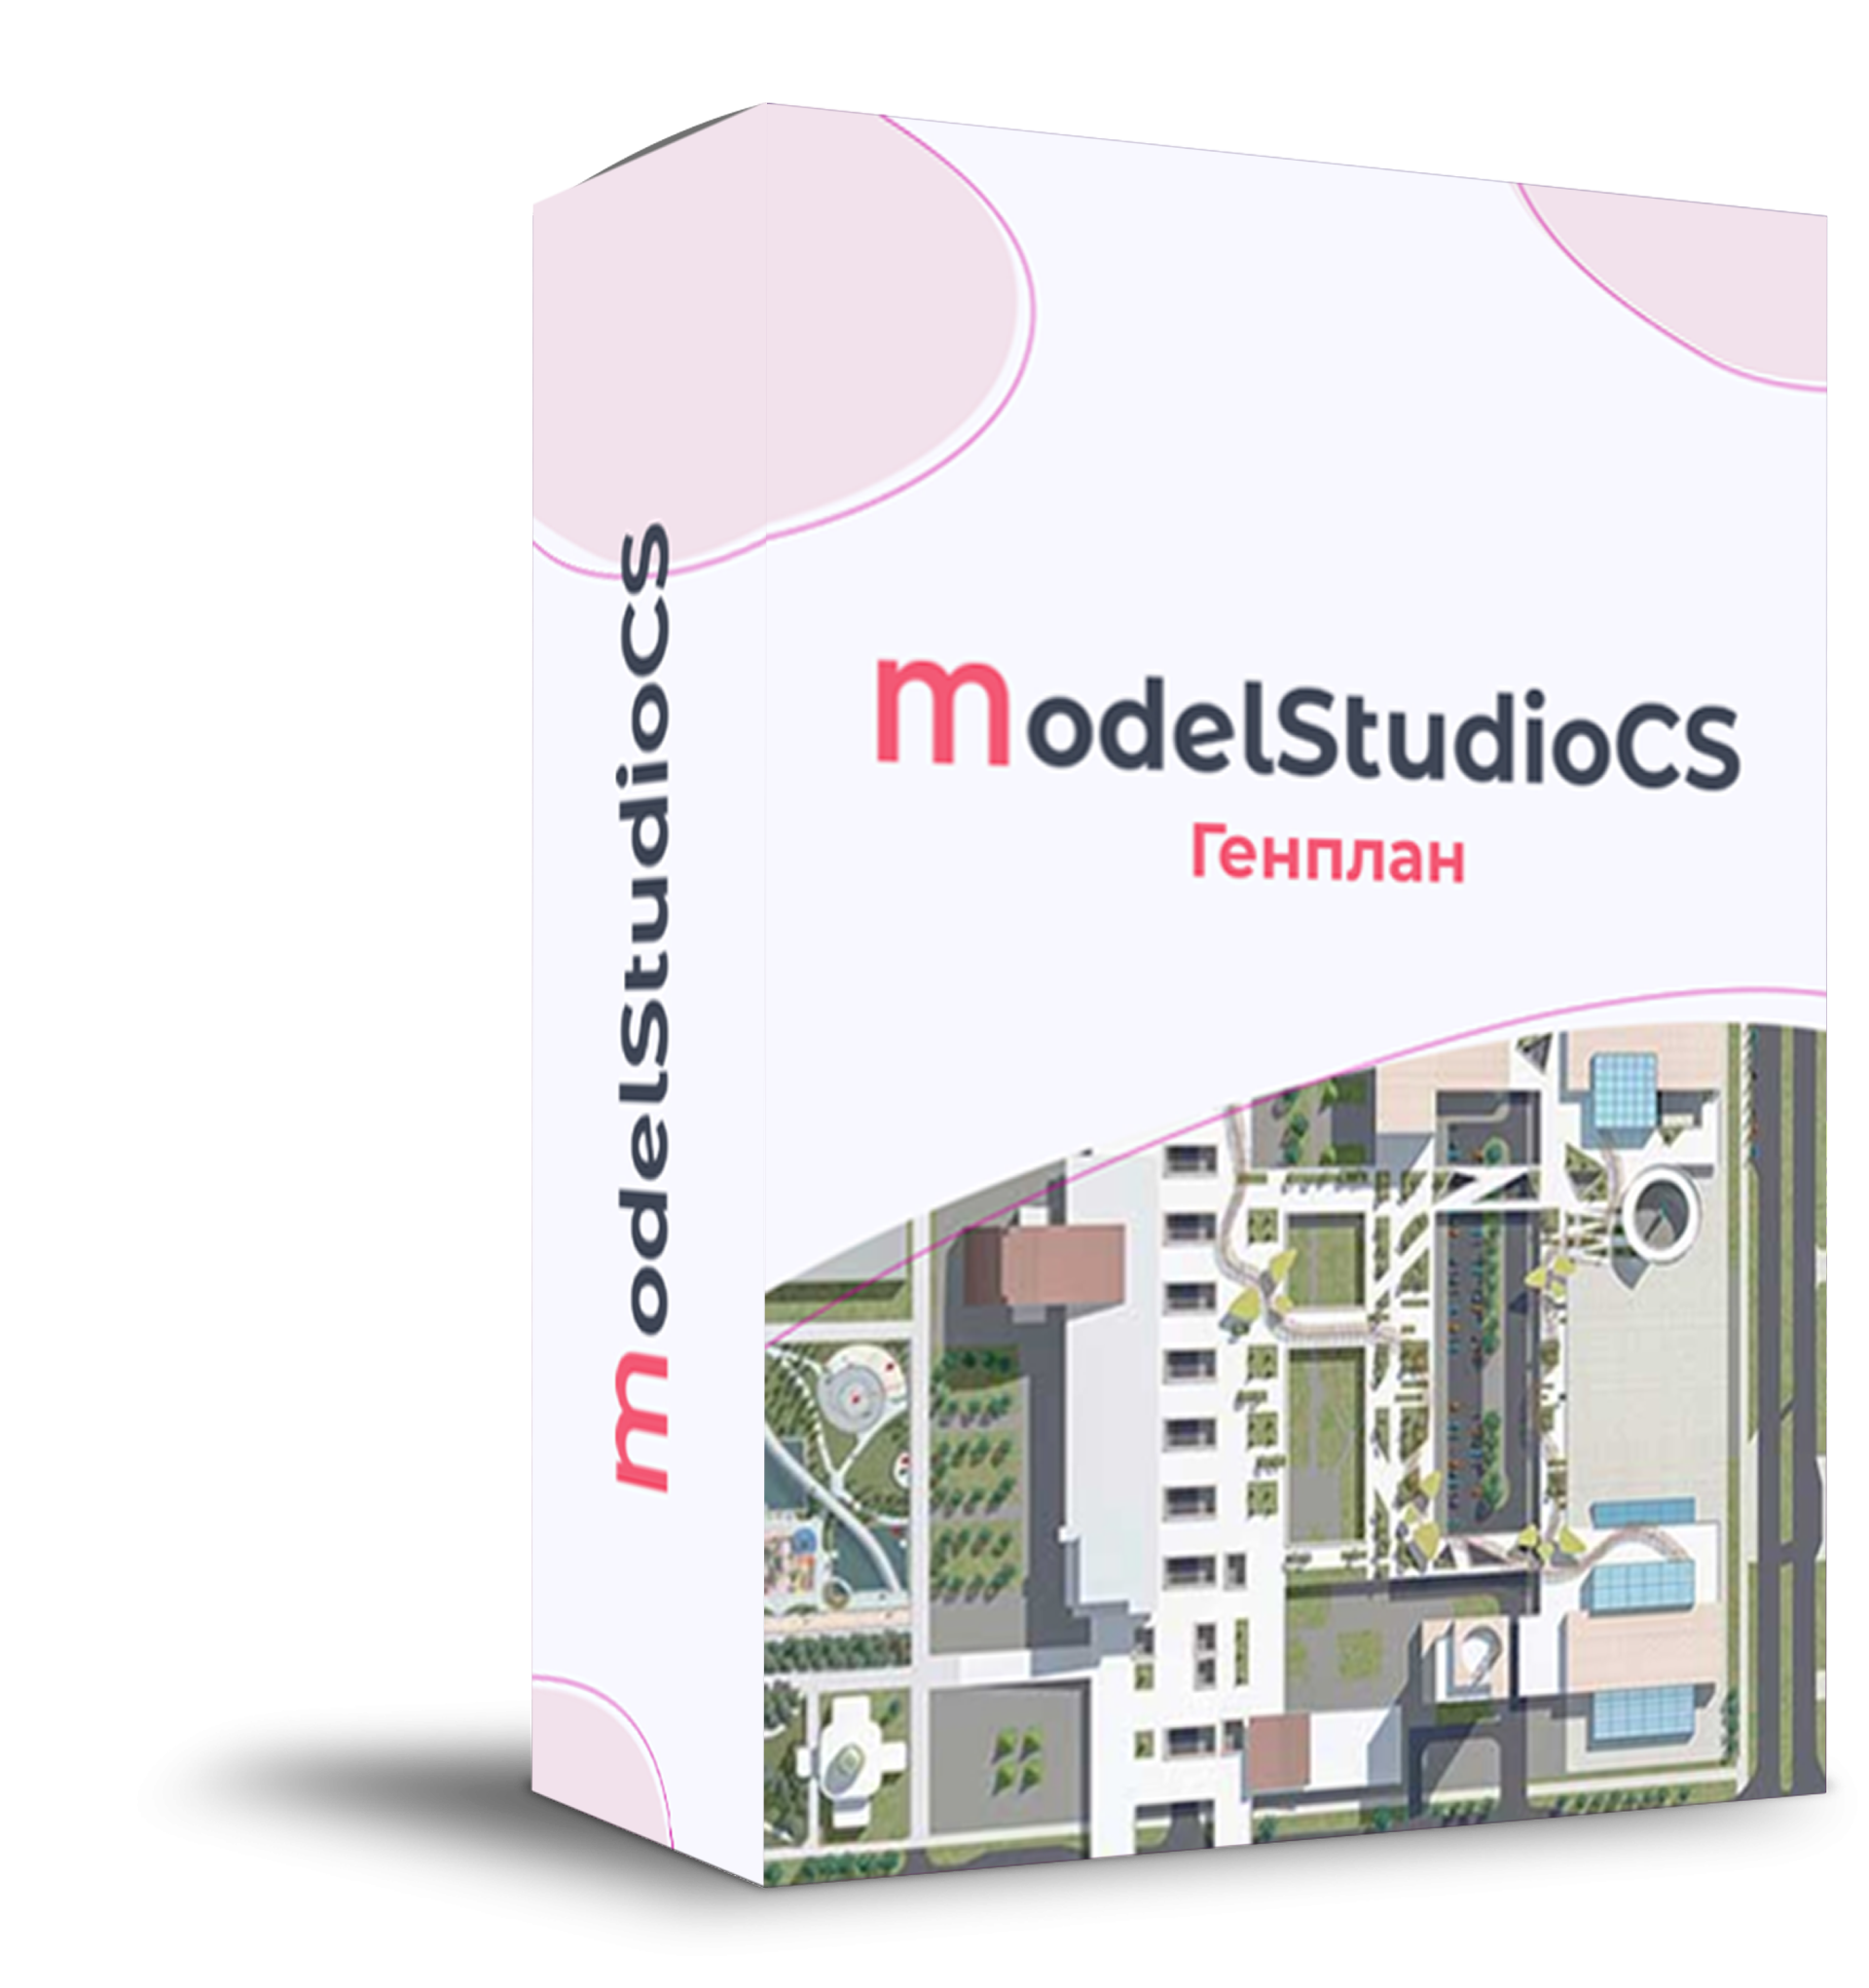 Model Studio CS Генплан